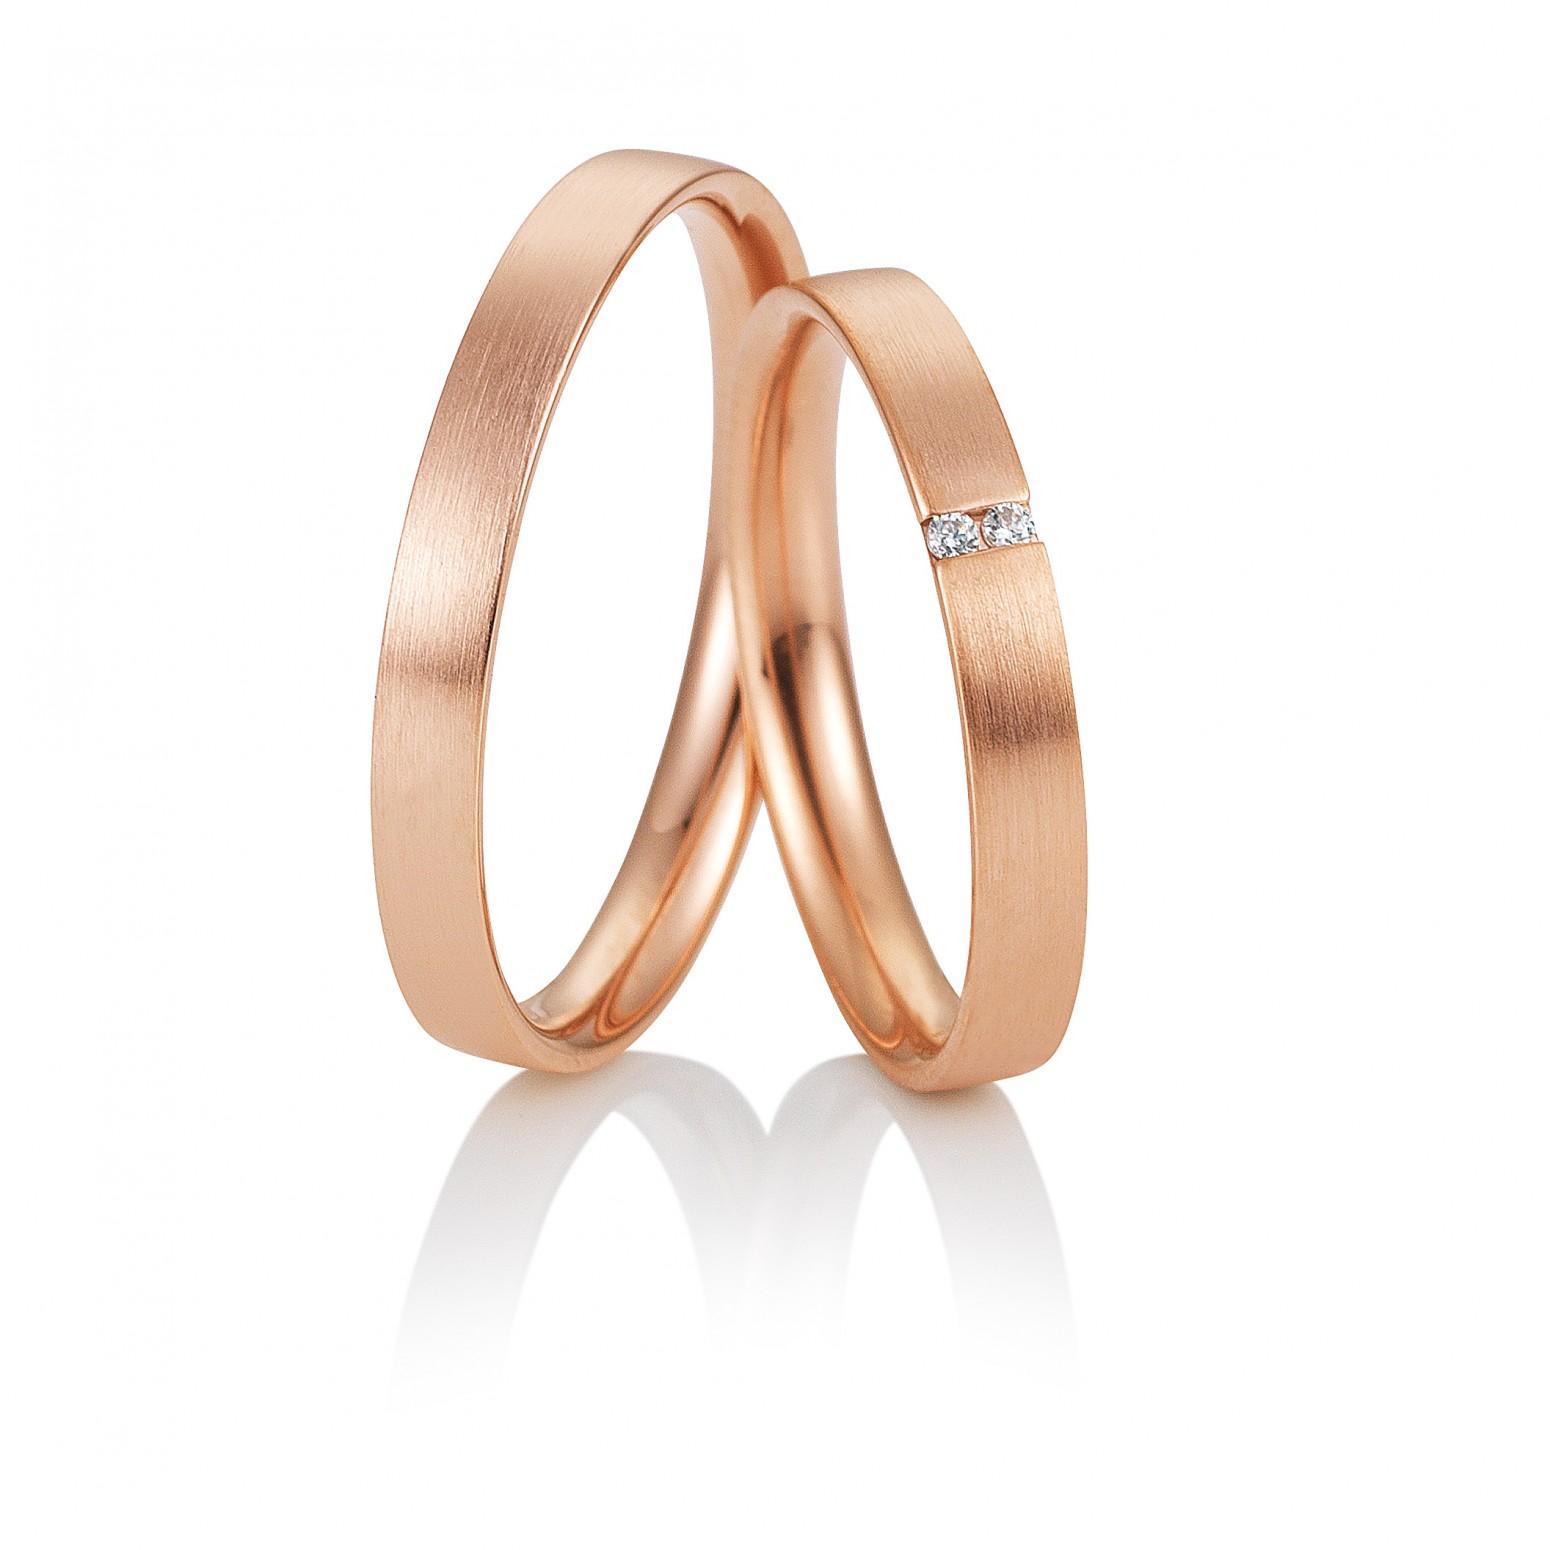 Saint Maurice wedding rings in pink gold, K9, pair da3600 WEDDING RINGS Κοσμηματα - chrilia.gr